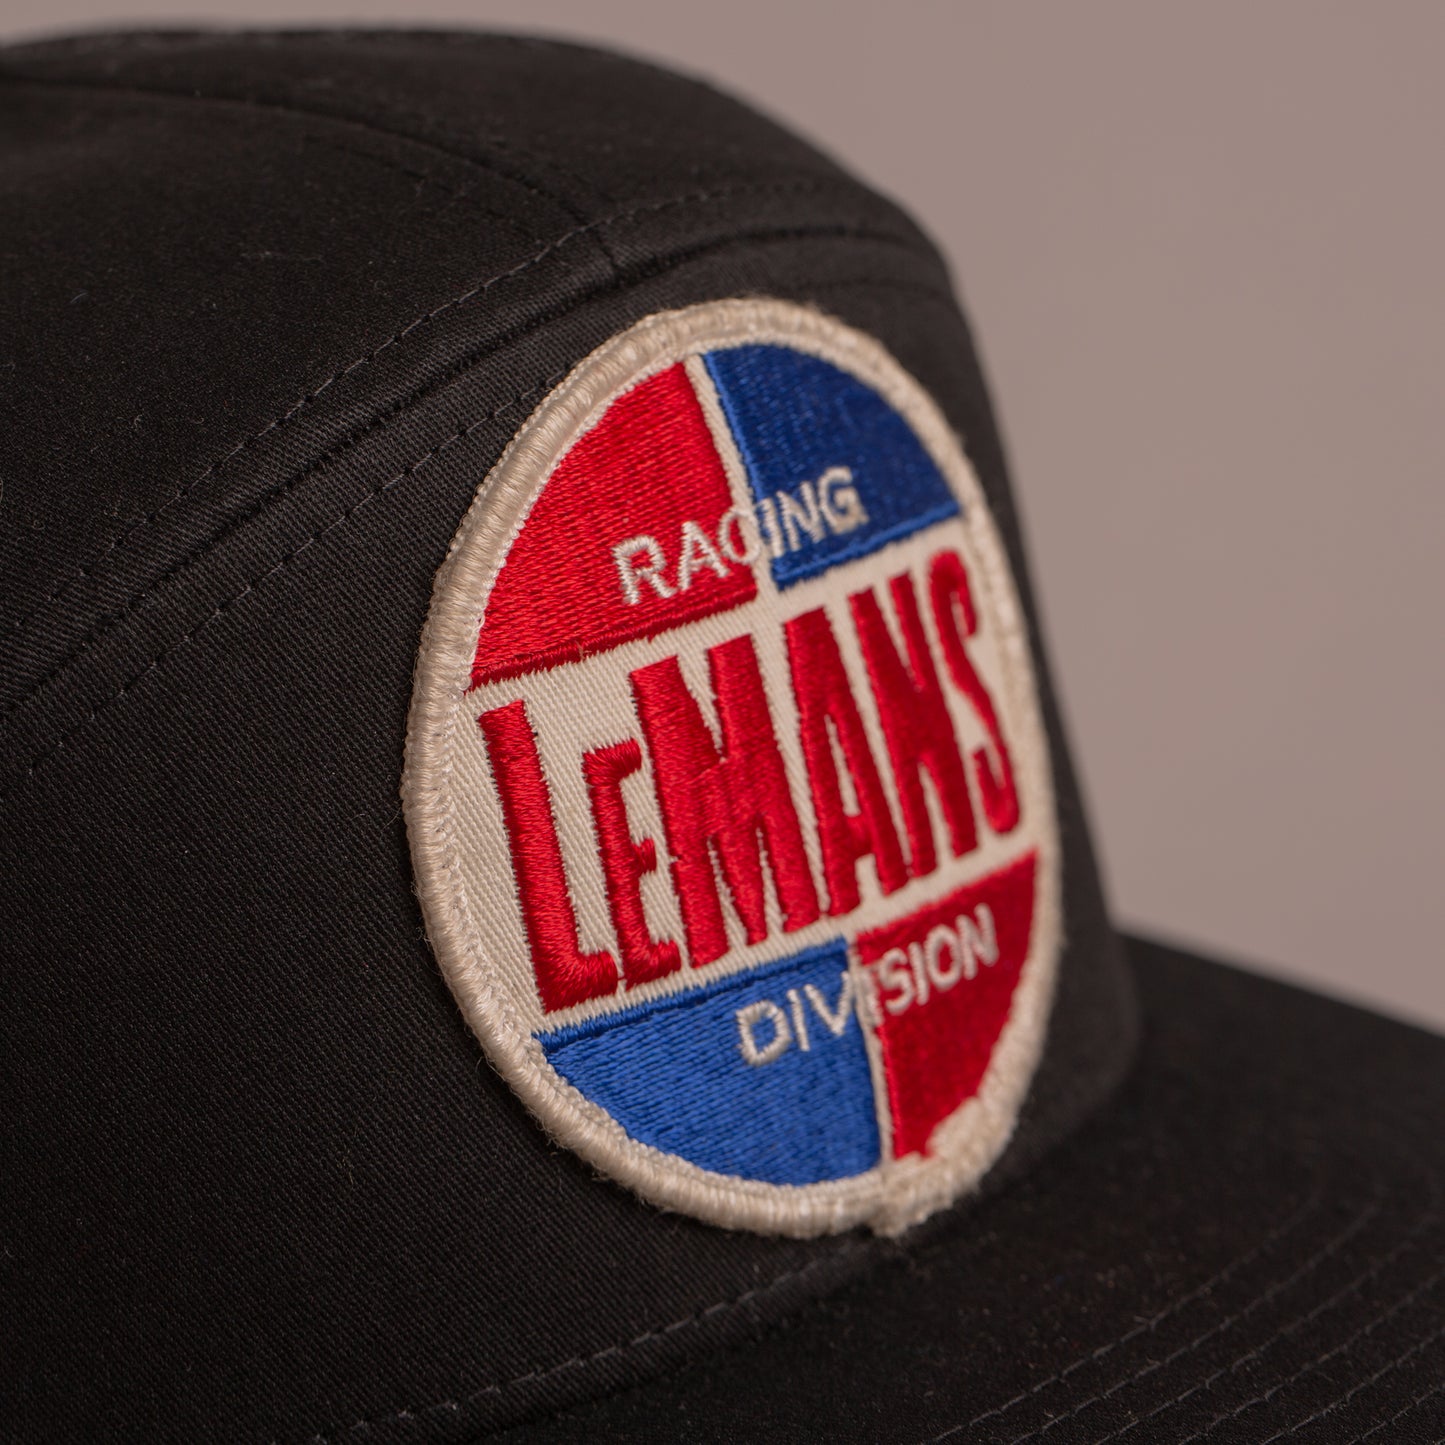 LeMans Racing Division